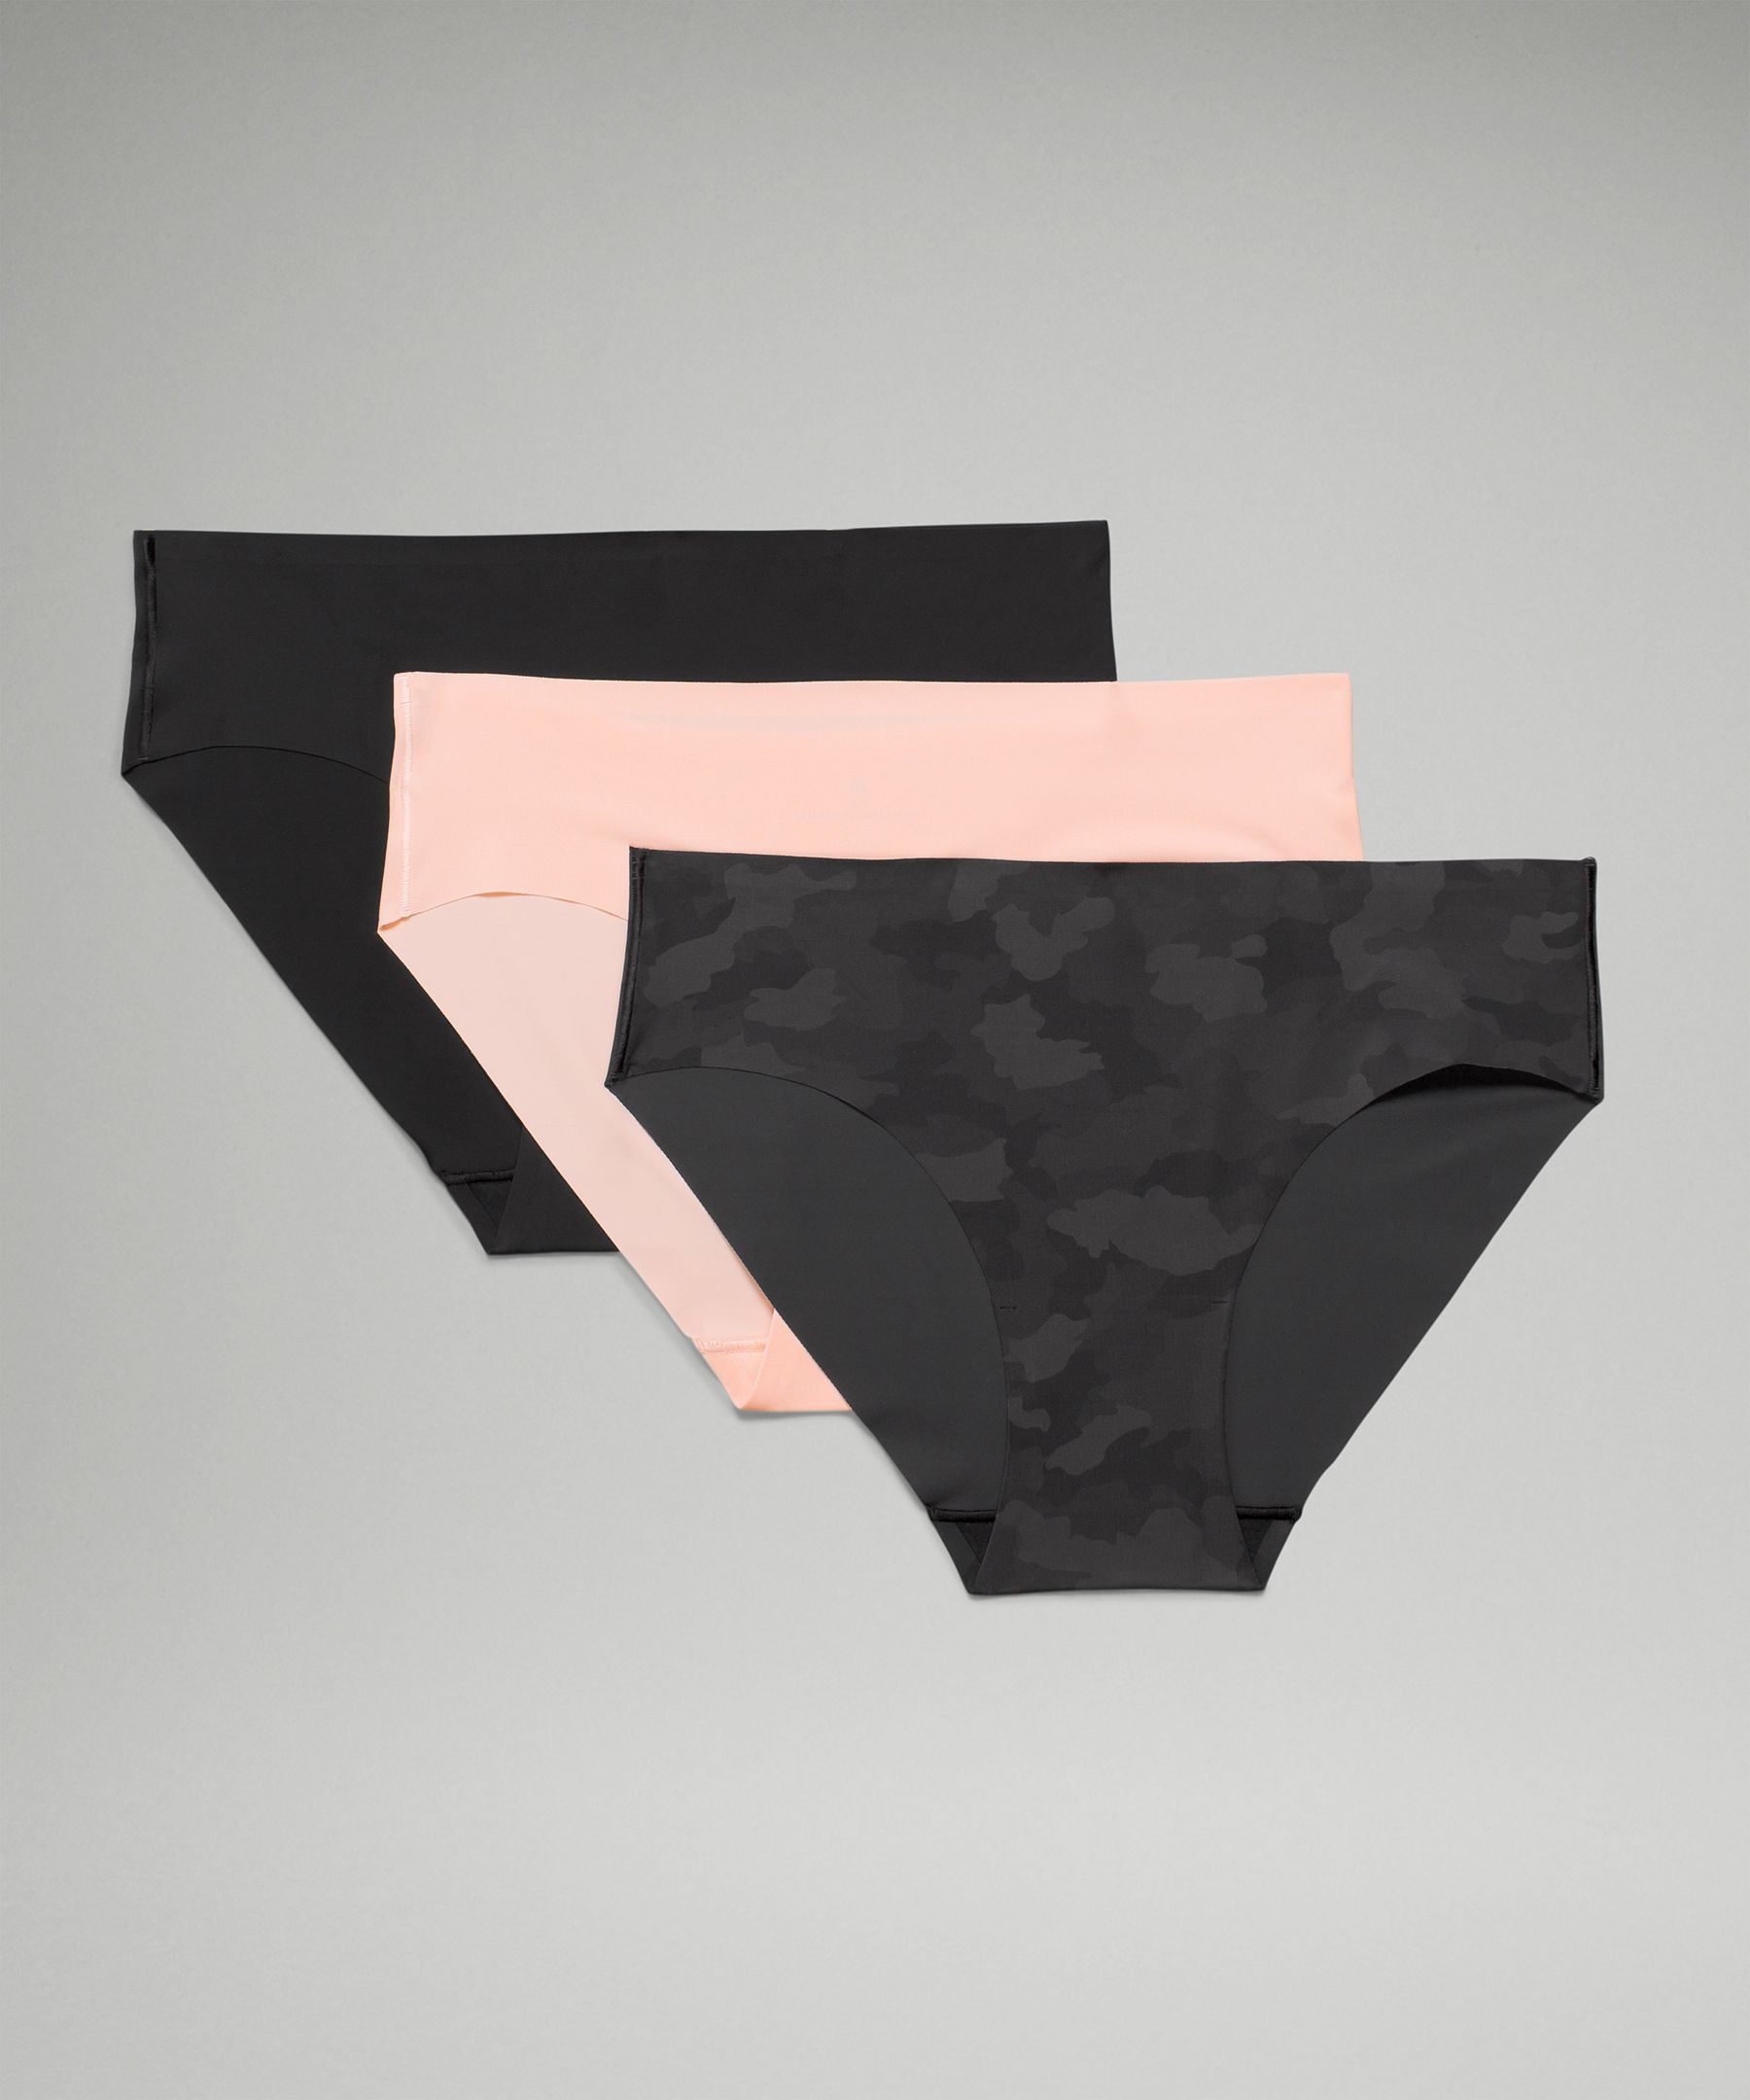 Lululemon Invisiwear Mid-rise Bikini Underwear 3 Pack In Multi